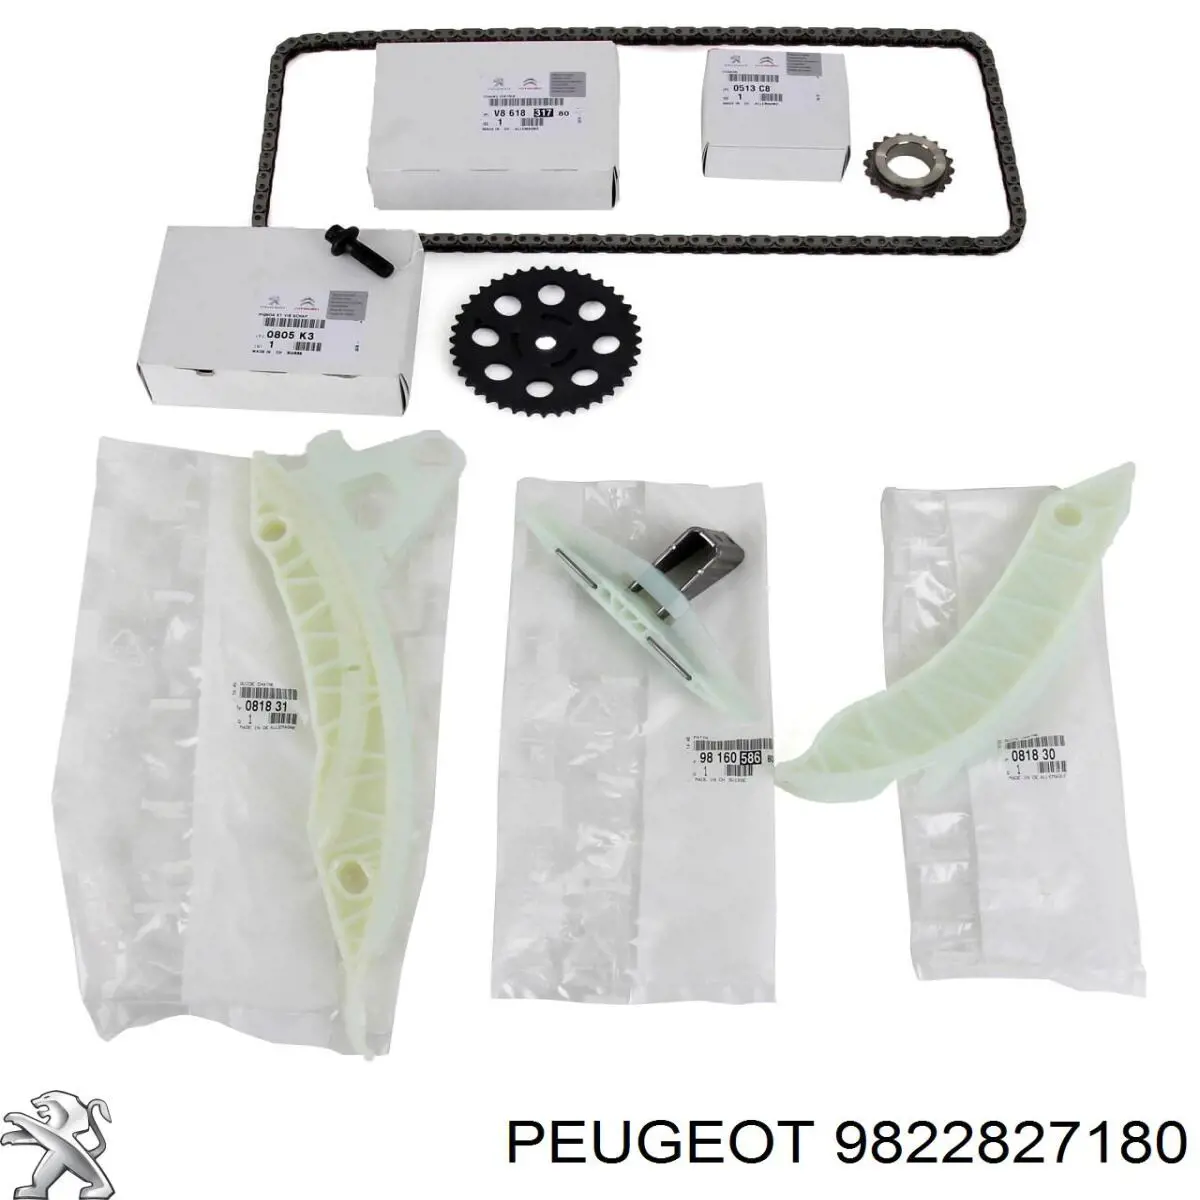 9822827180 Peugeot/Citroen kit de cadenas de distribución